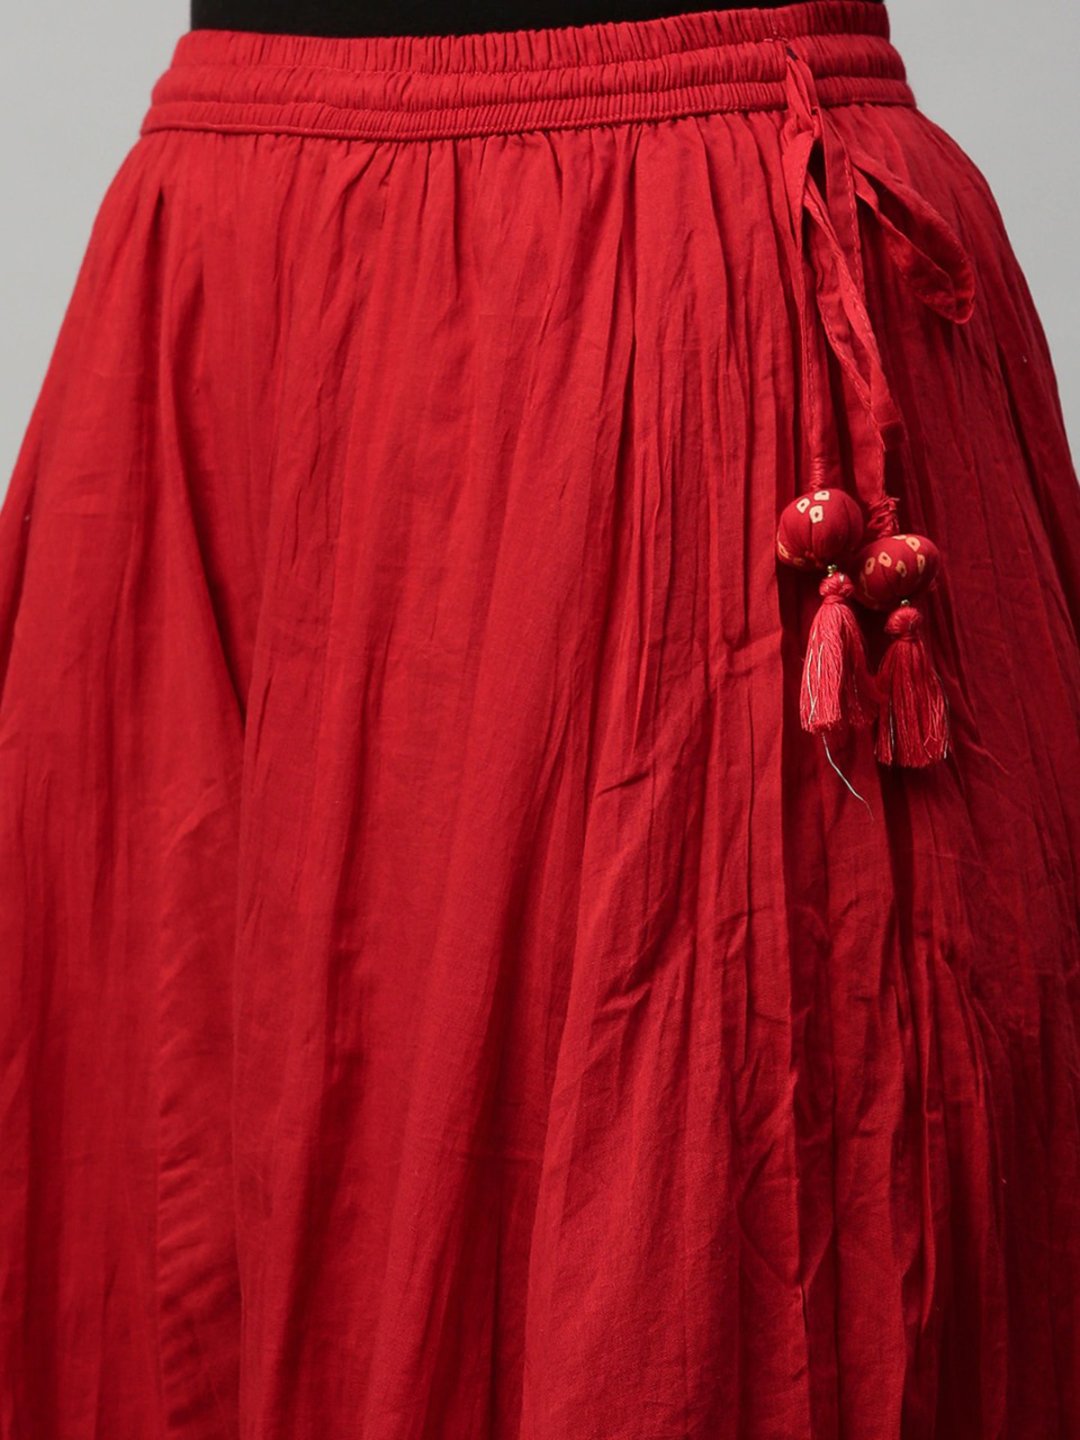 Ishin Women's Cotton Red Bandhani Print Embellished Straight Kurta Sharara Set